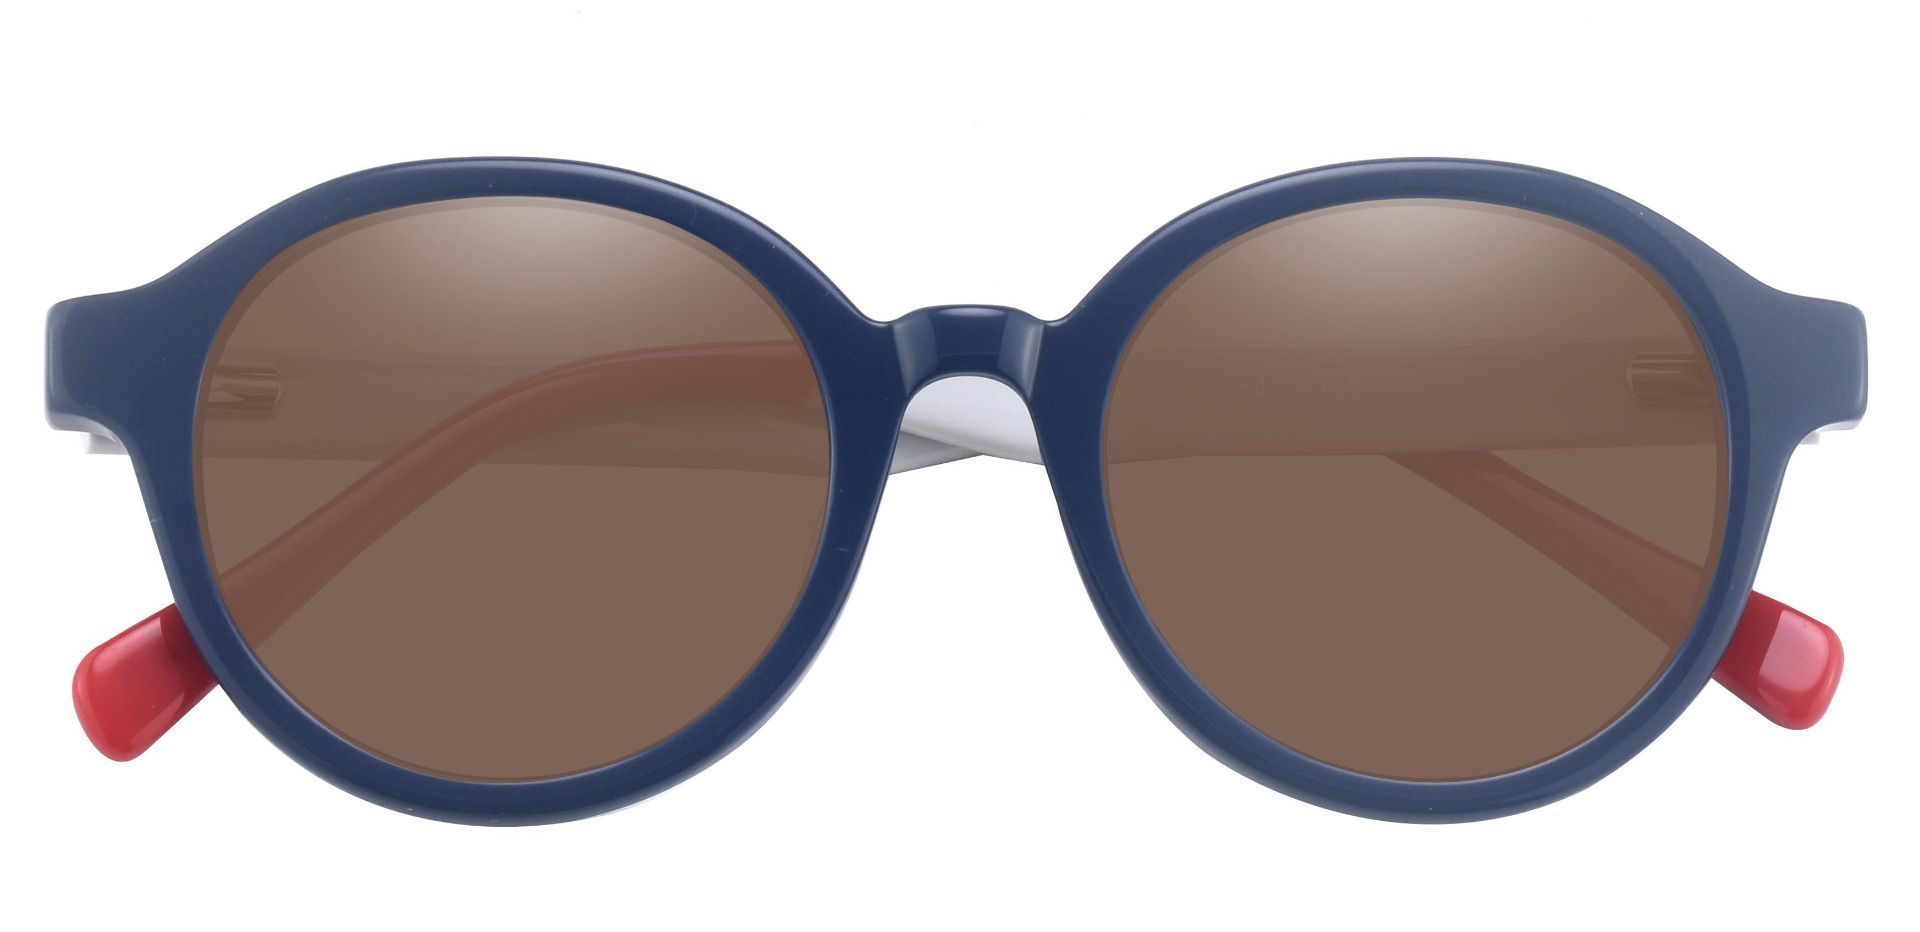 Roxbury Round Progressive Sunglasses - Blue Frame With Brown Lenses